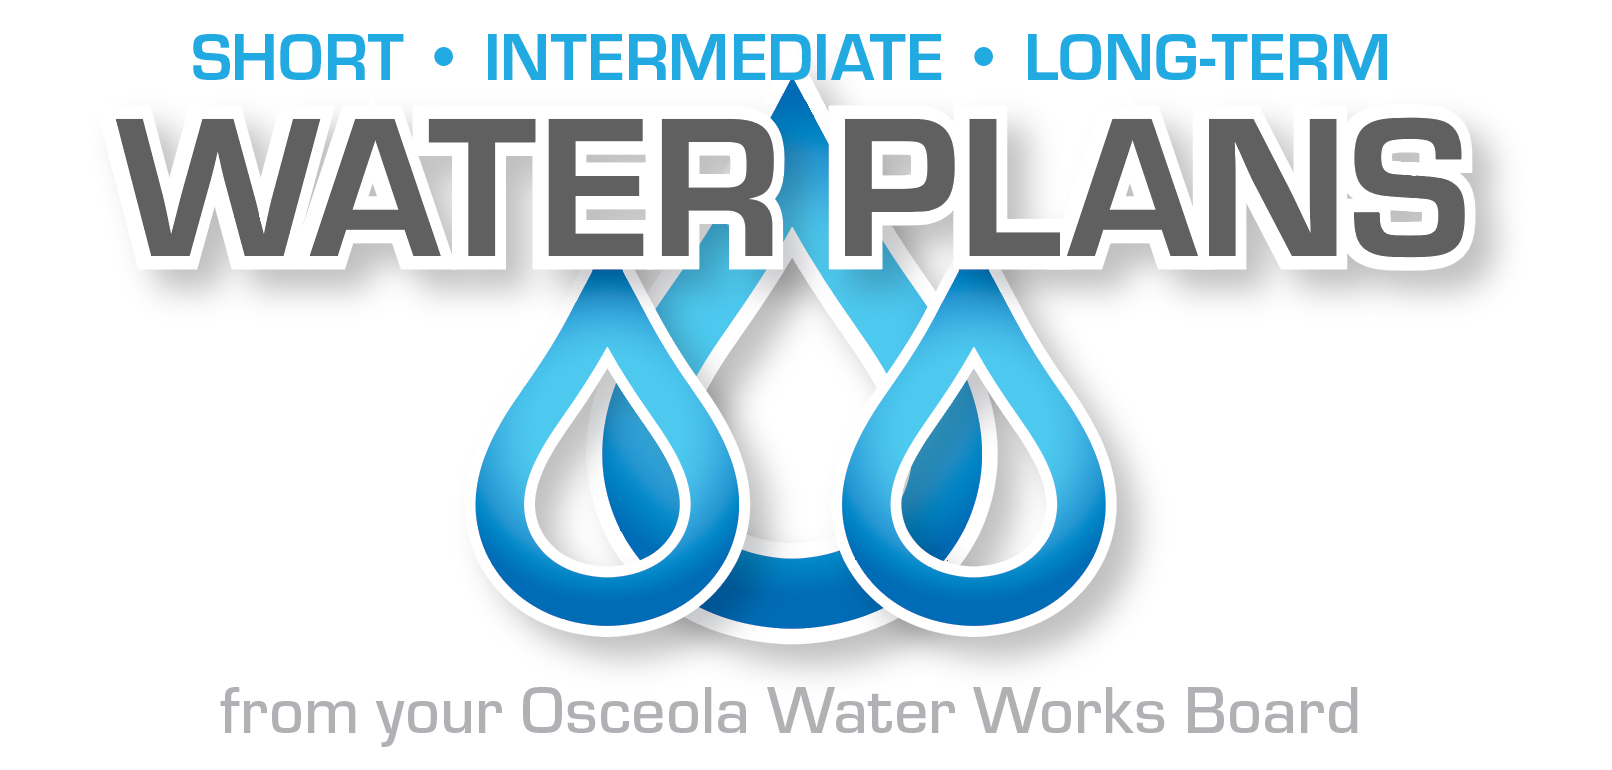 water in osceola